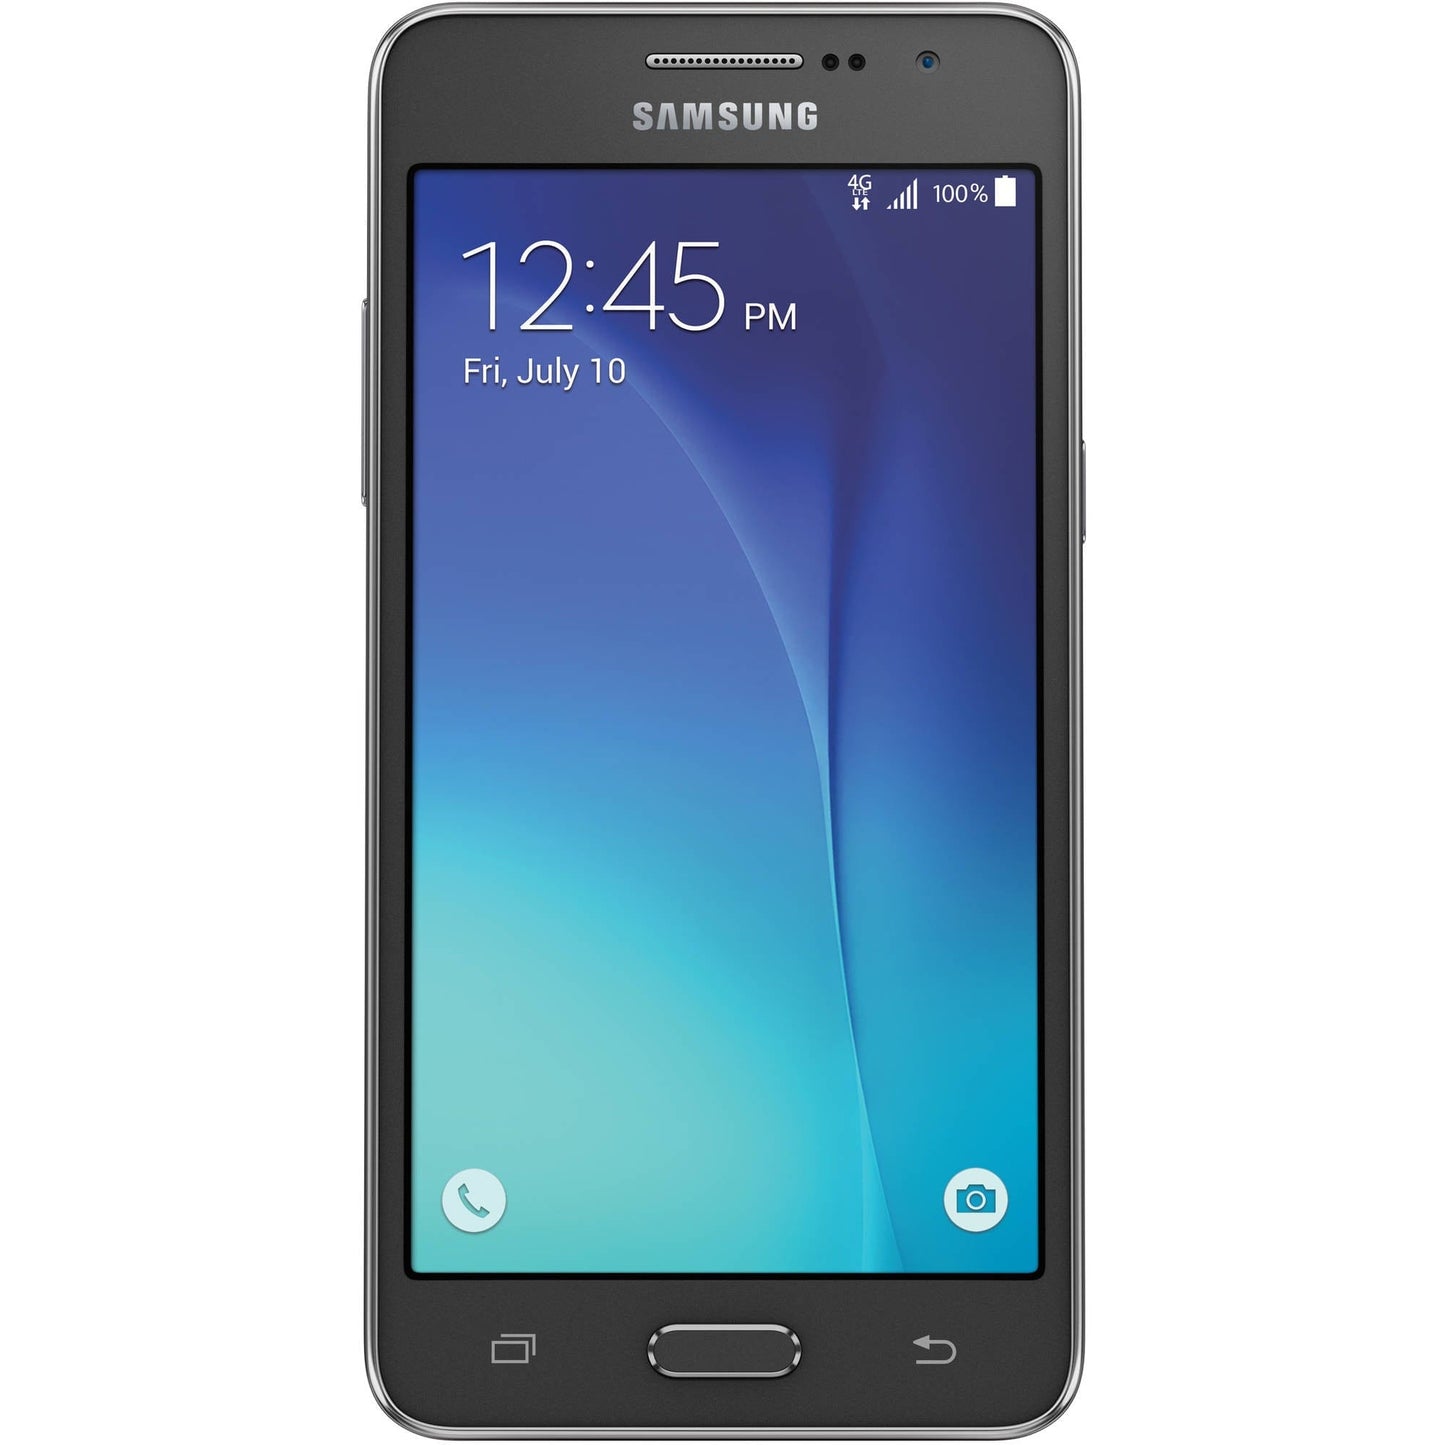 Samsung Galaxy Grand Prime - 8 GB - Gray - U.S. mobile - CDMA